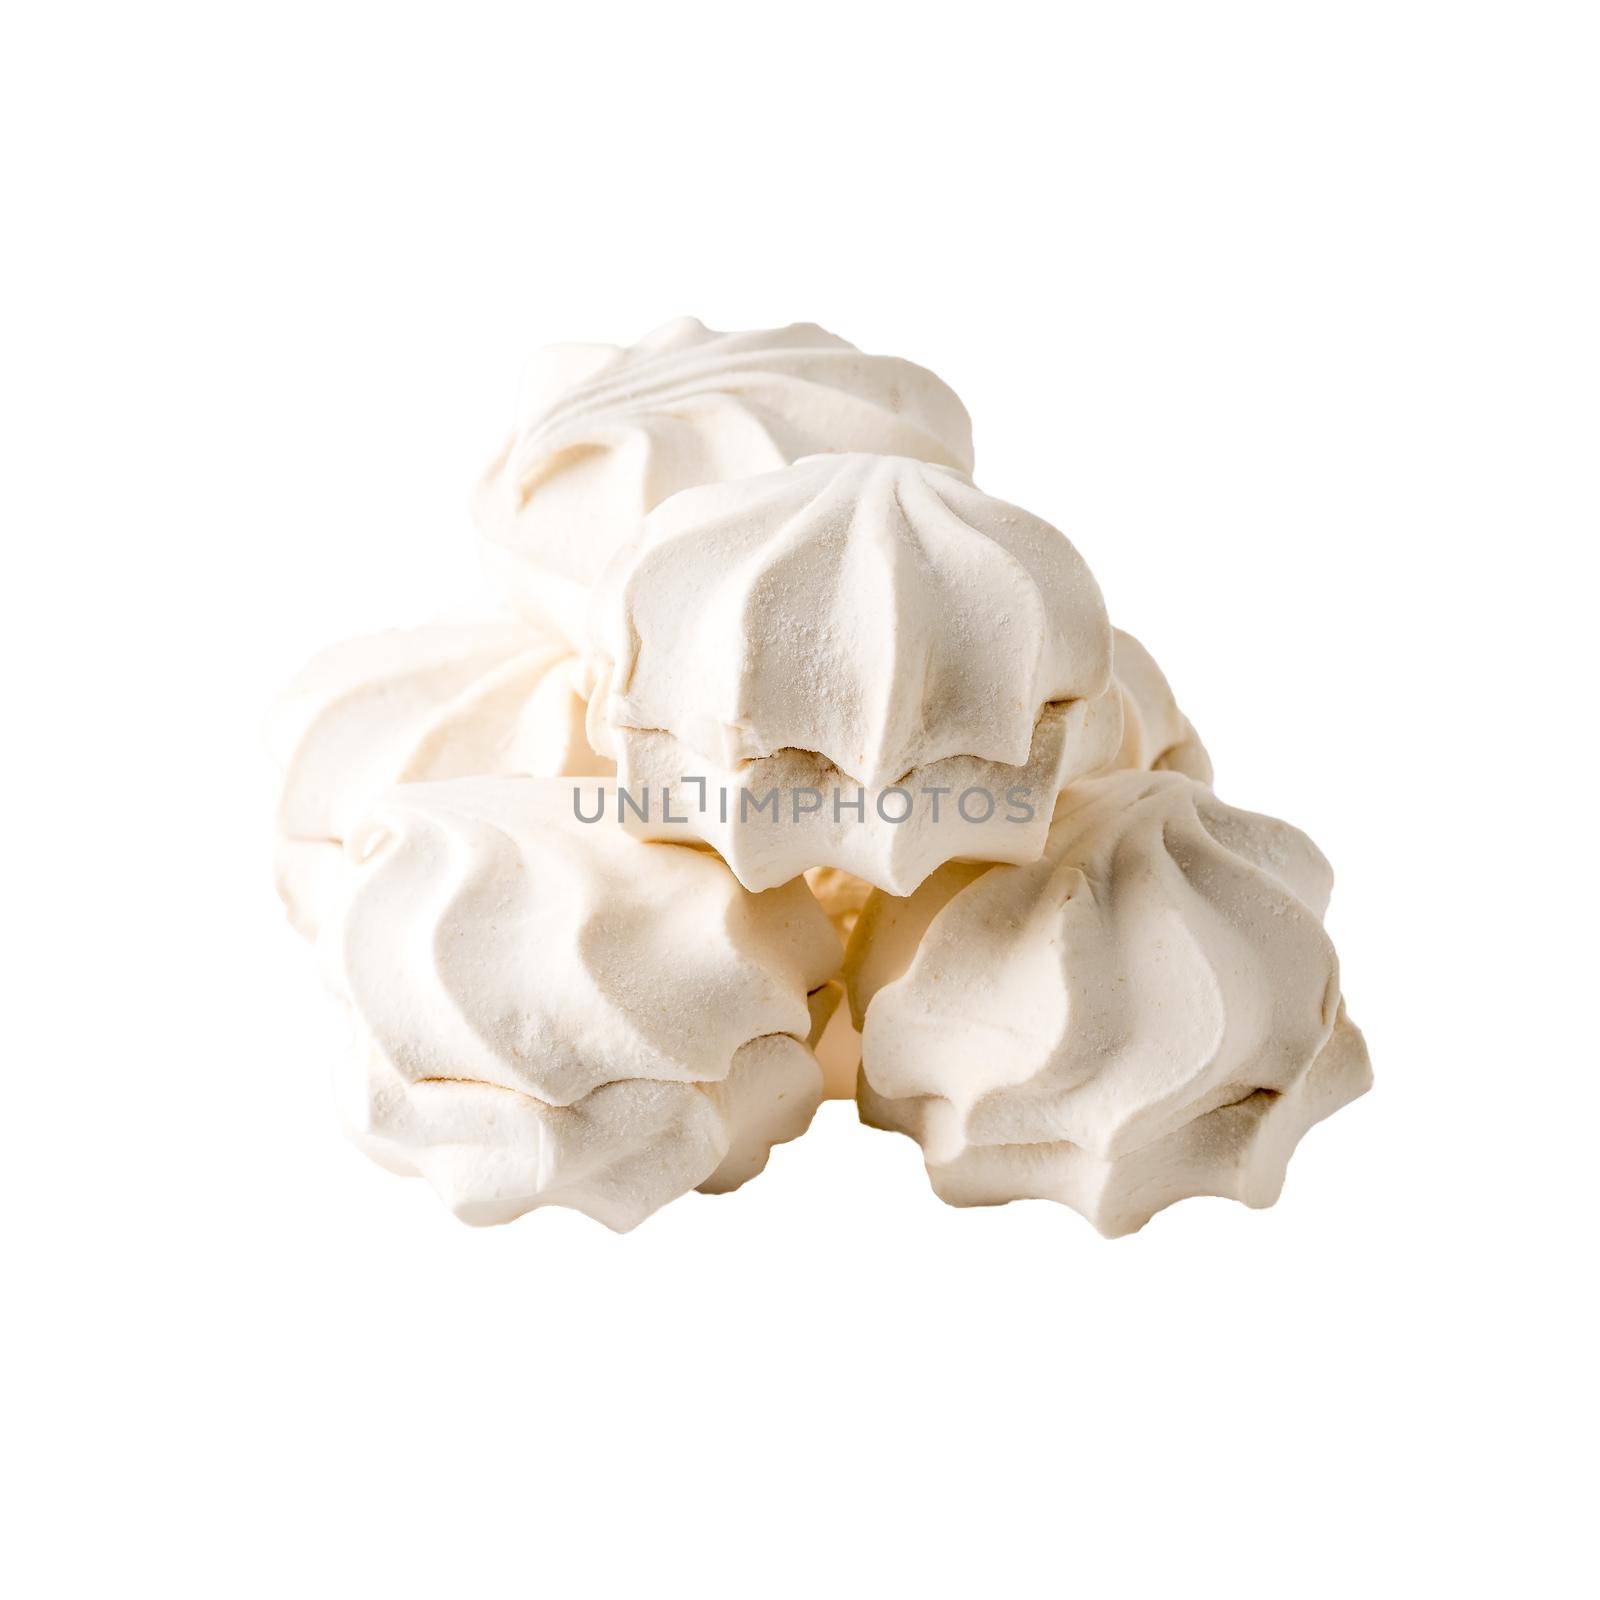 Vanilla souffle, marshmallow or zephyr isolated on white background by NataBene